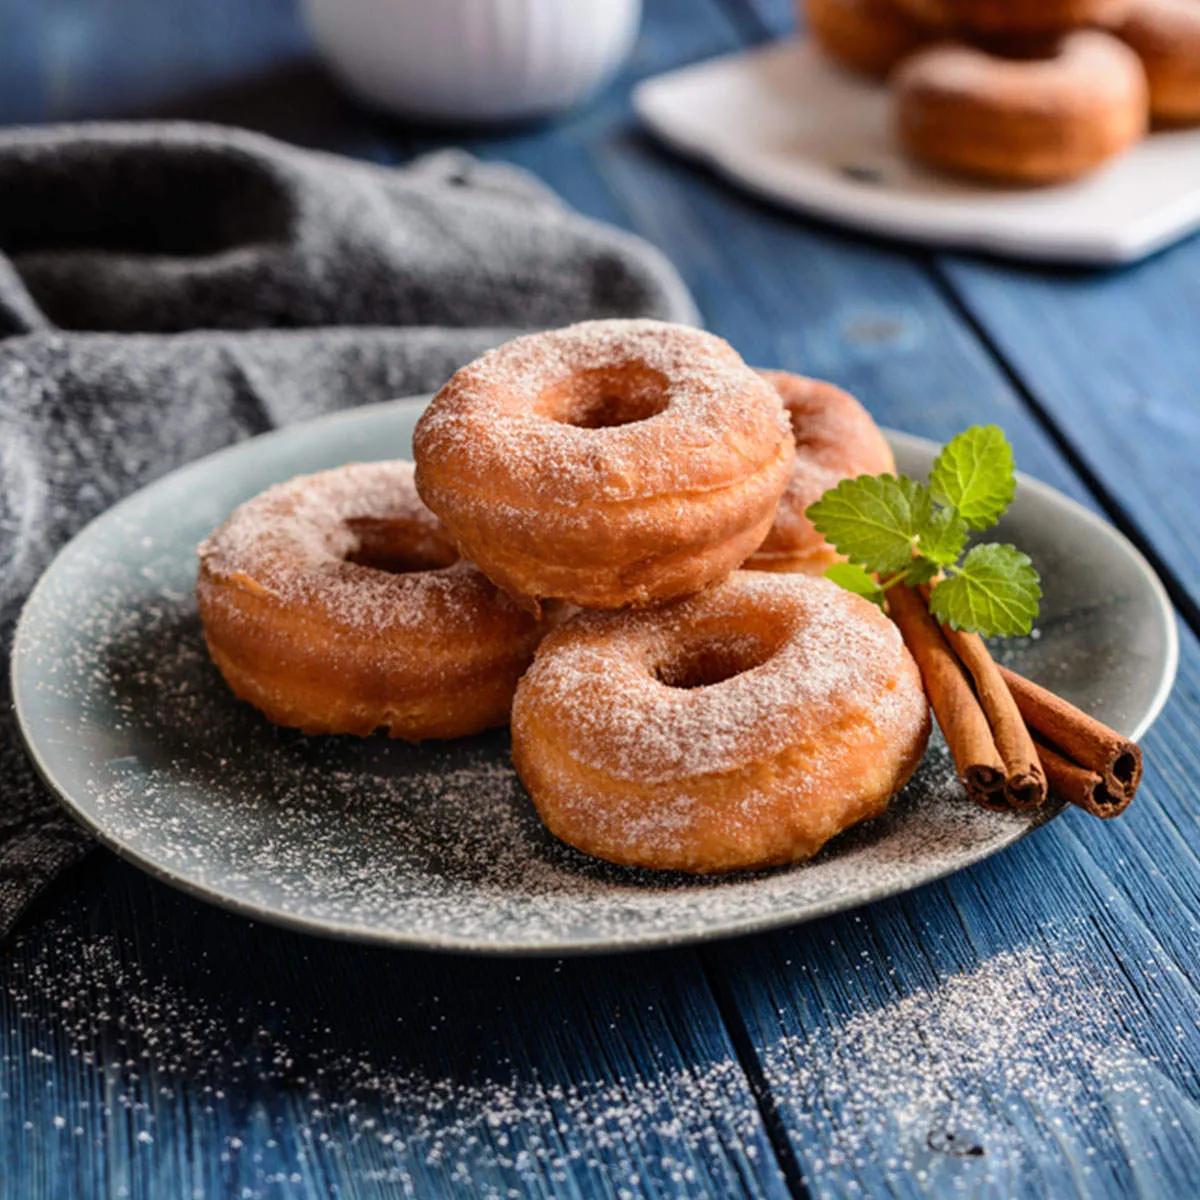 Cinnamon Doughnuts Recipe: How to Make Cinnamon Doughnuts